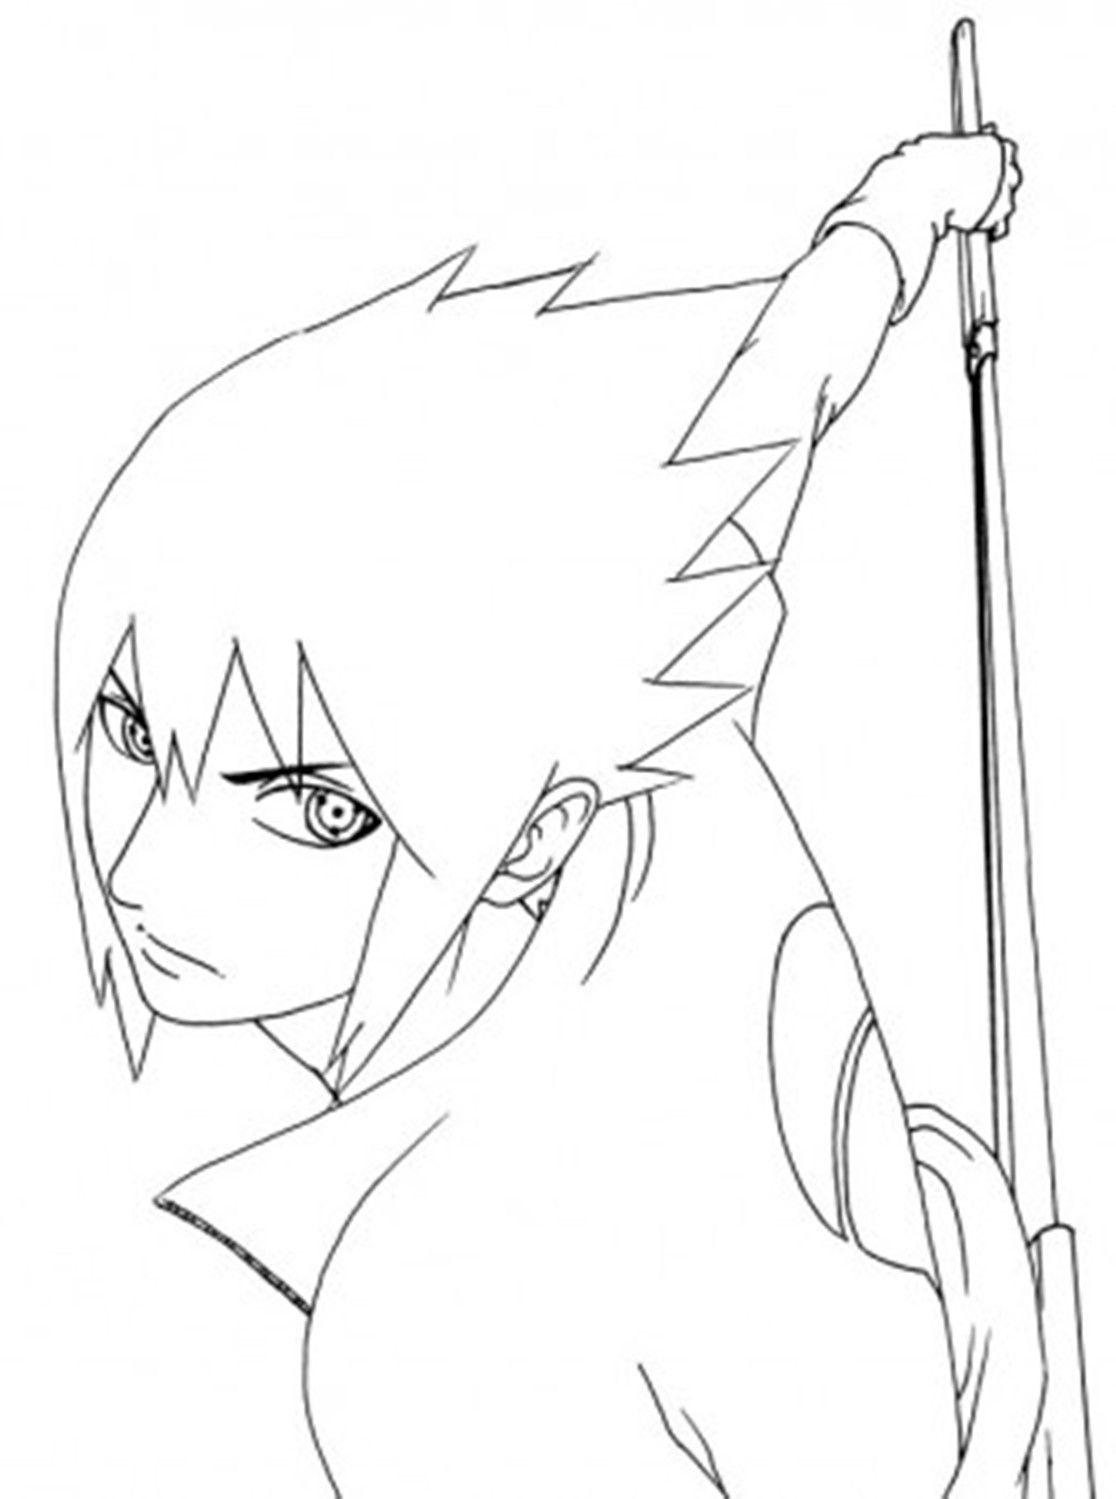 Sasuke Revoke Sword | Coloring pages, Pokemon coloring pages, Sasuke